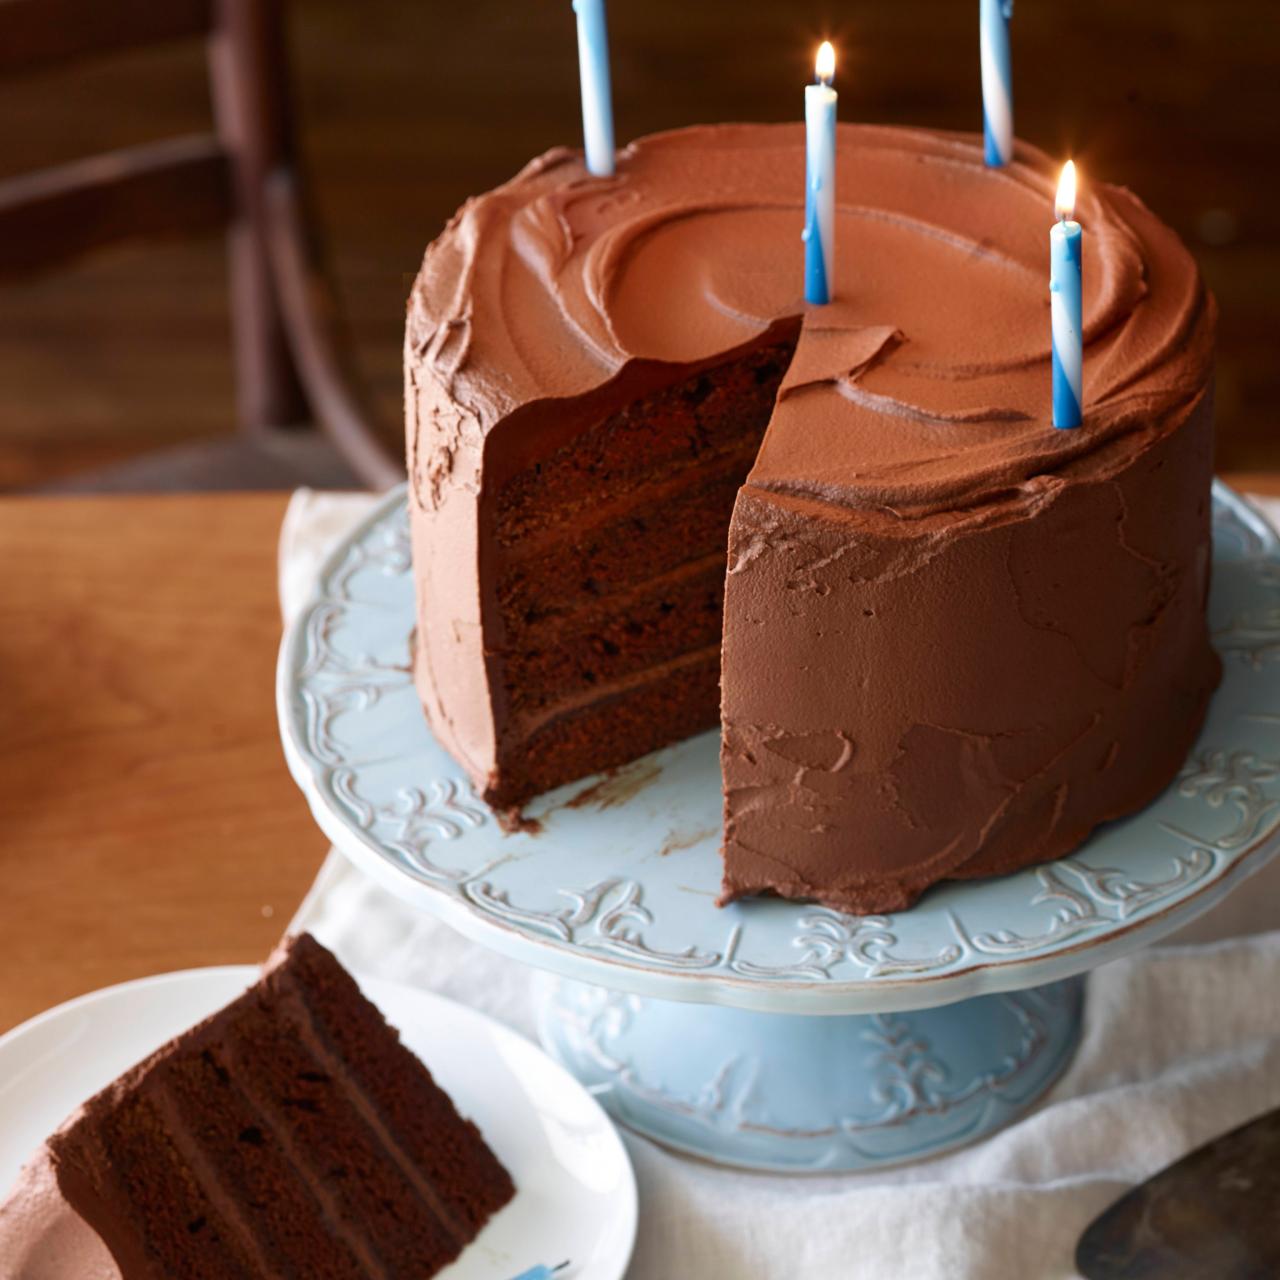 The Best Chocolate Vegan Birthday Cake You'll Ever Make (Allergy Free!)